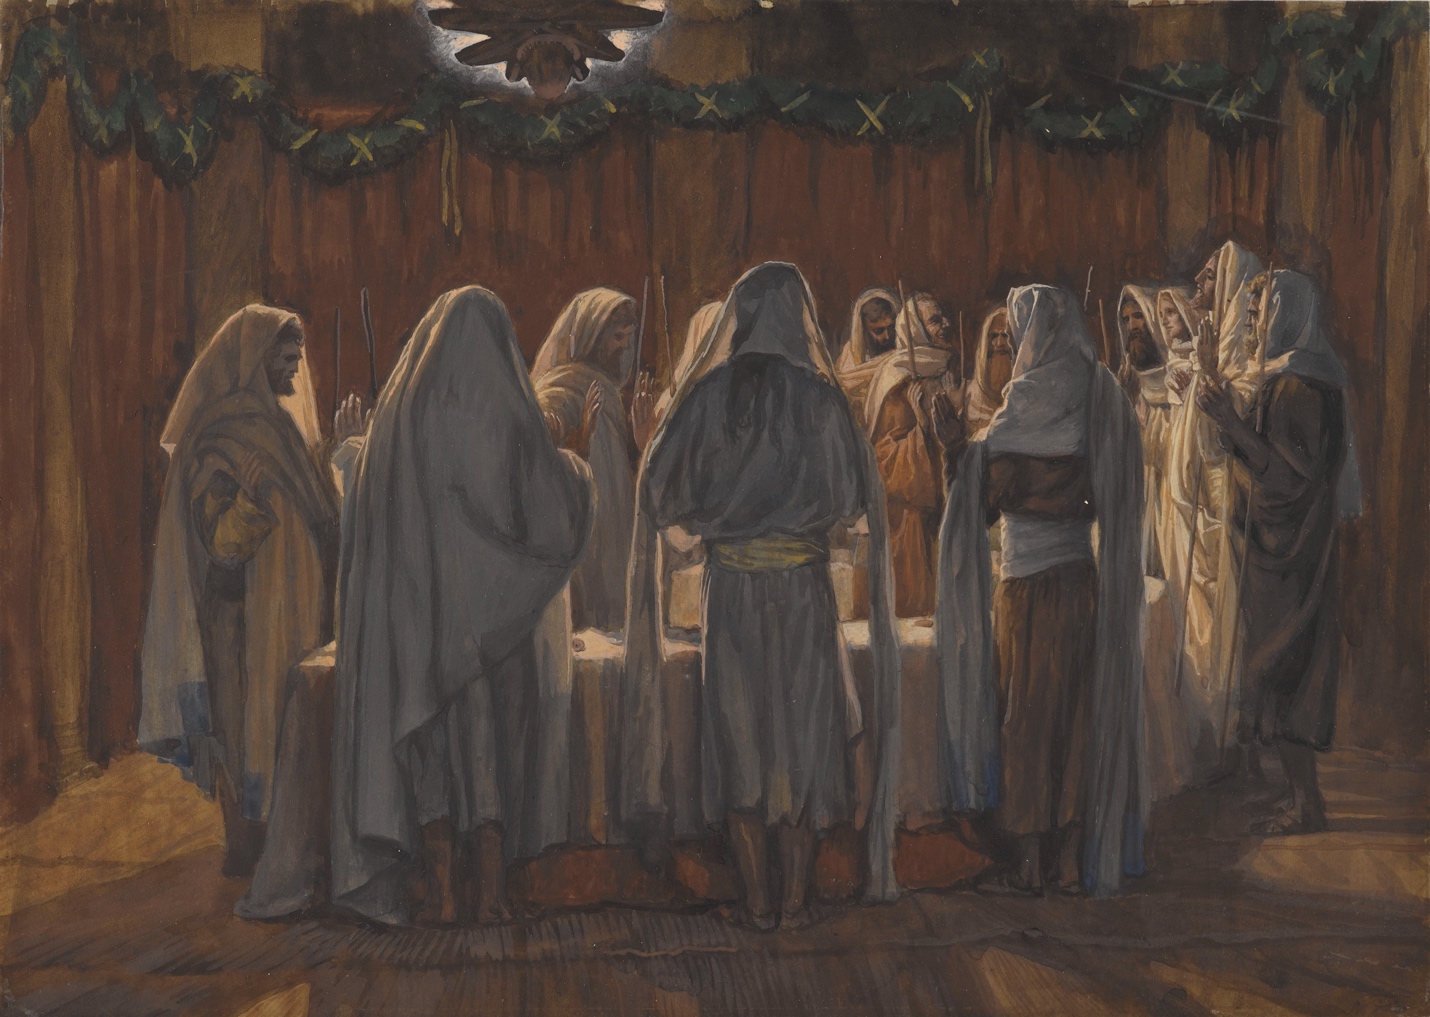 J. James Tissot, 1836-1902: The Last Supper, 1886-1894